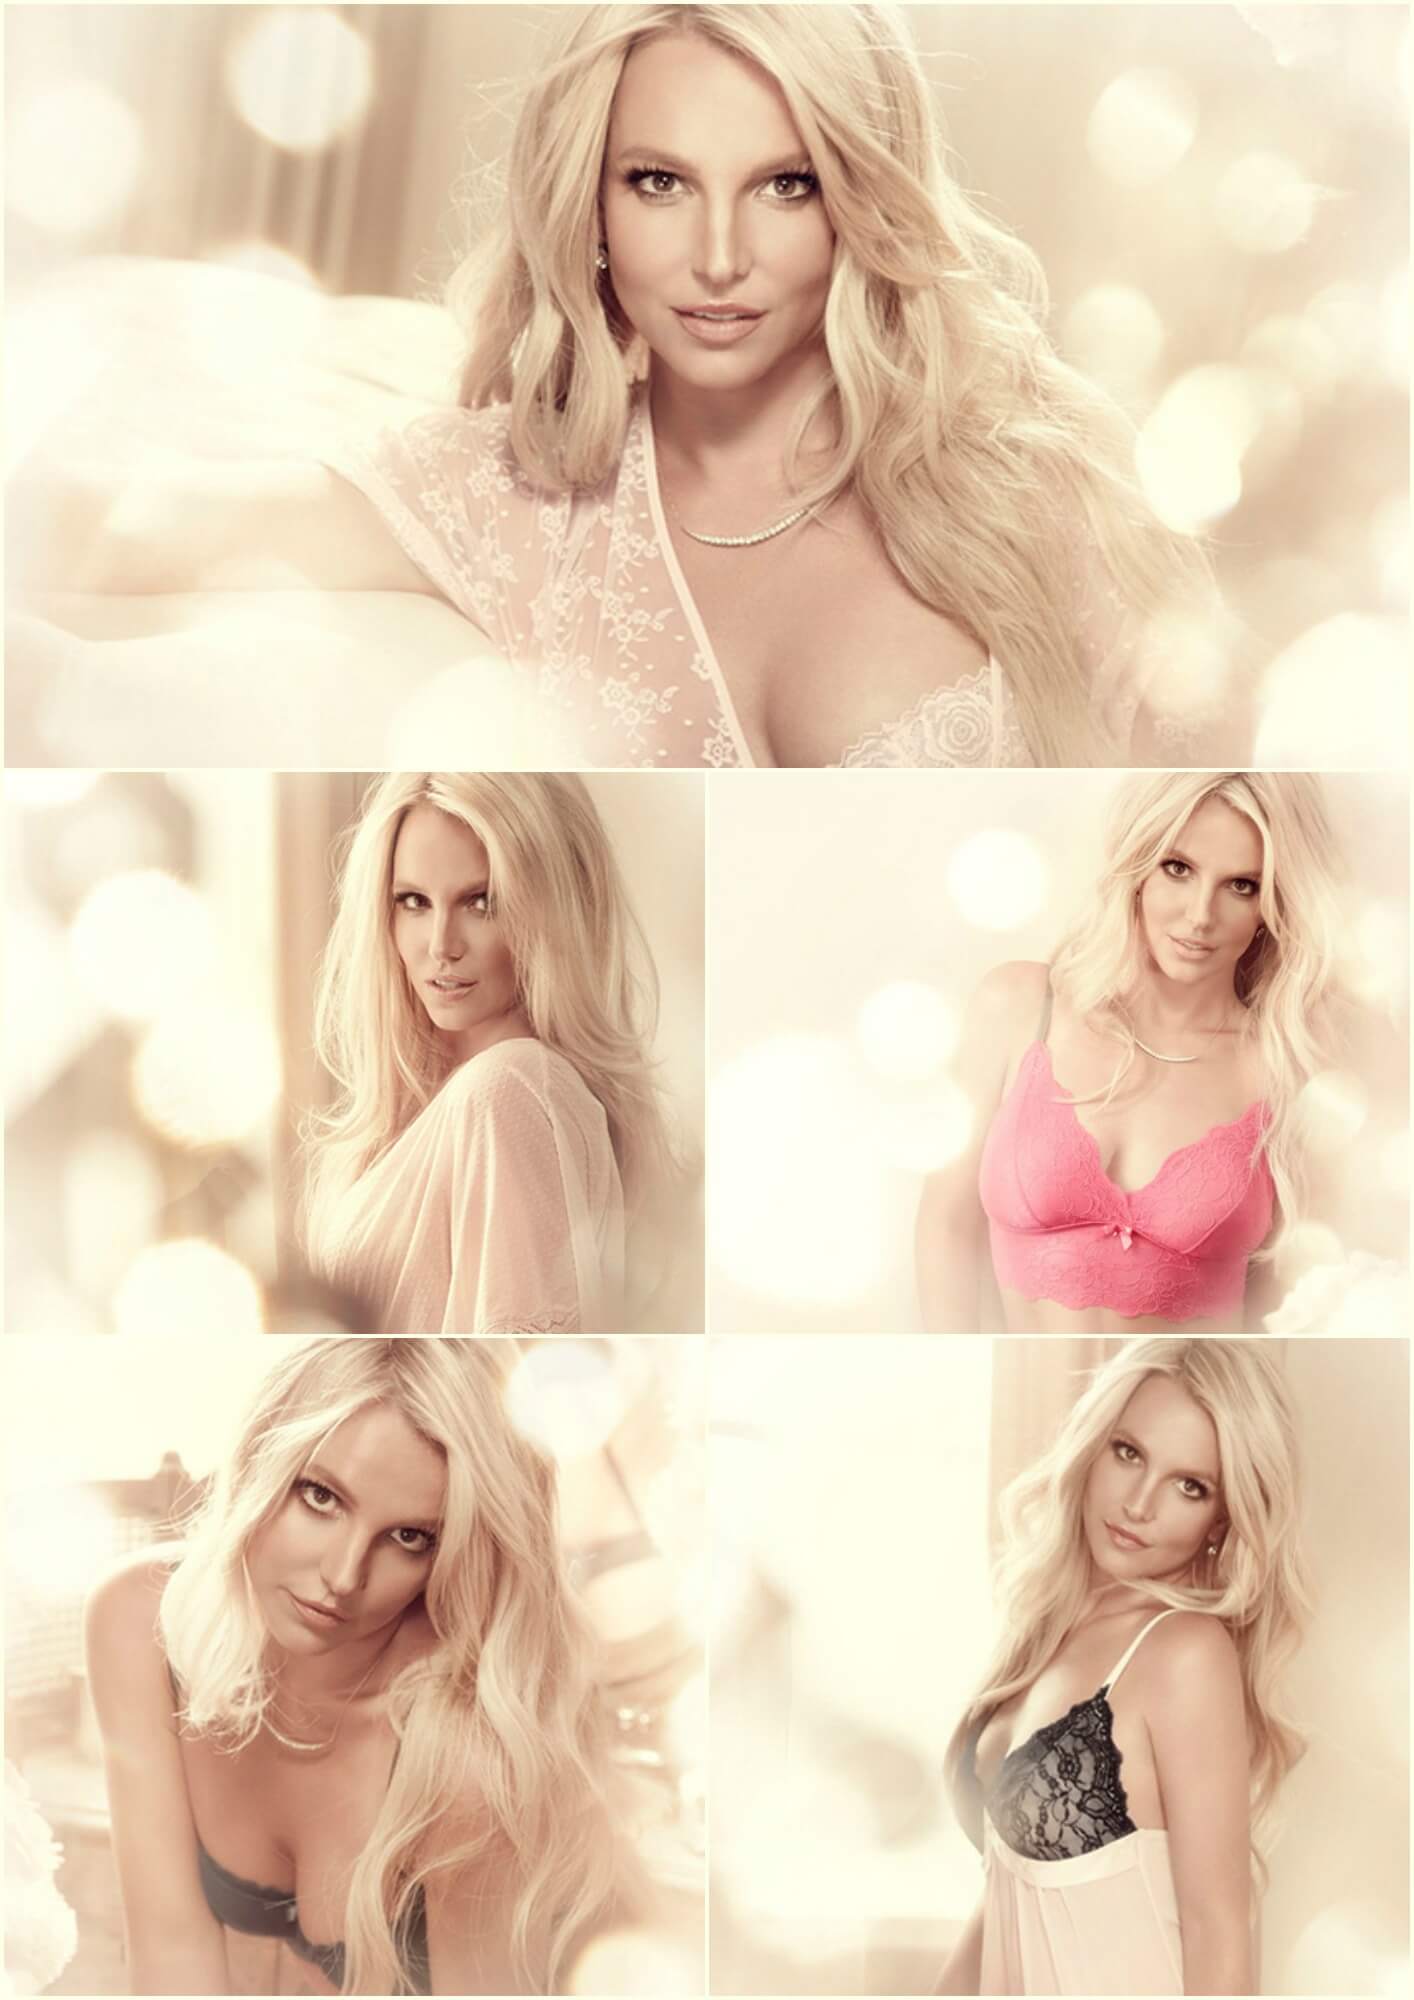 Whatever Happened to Britney Spears' Lingerie Line?